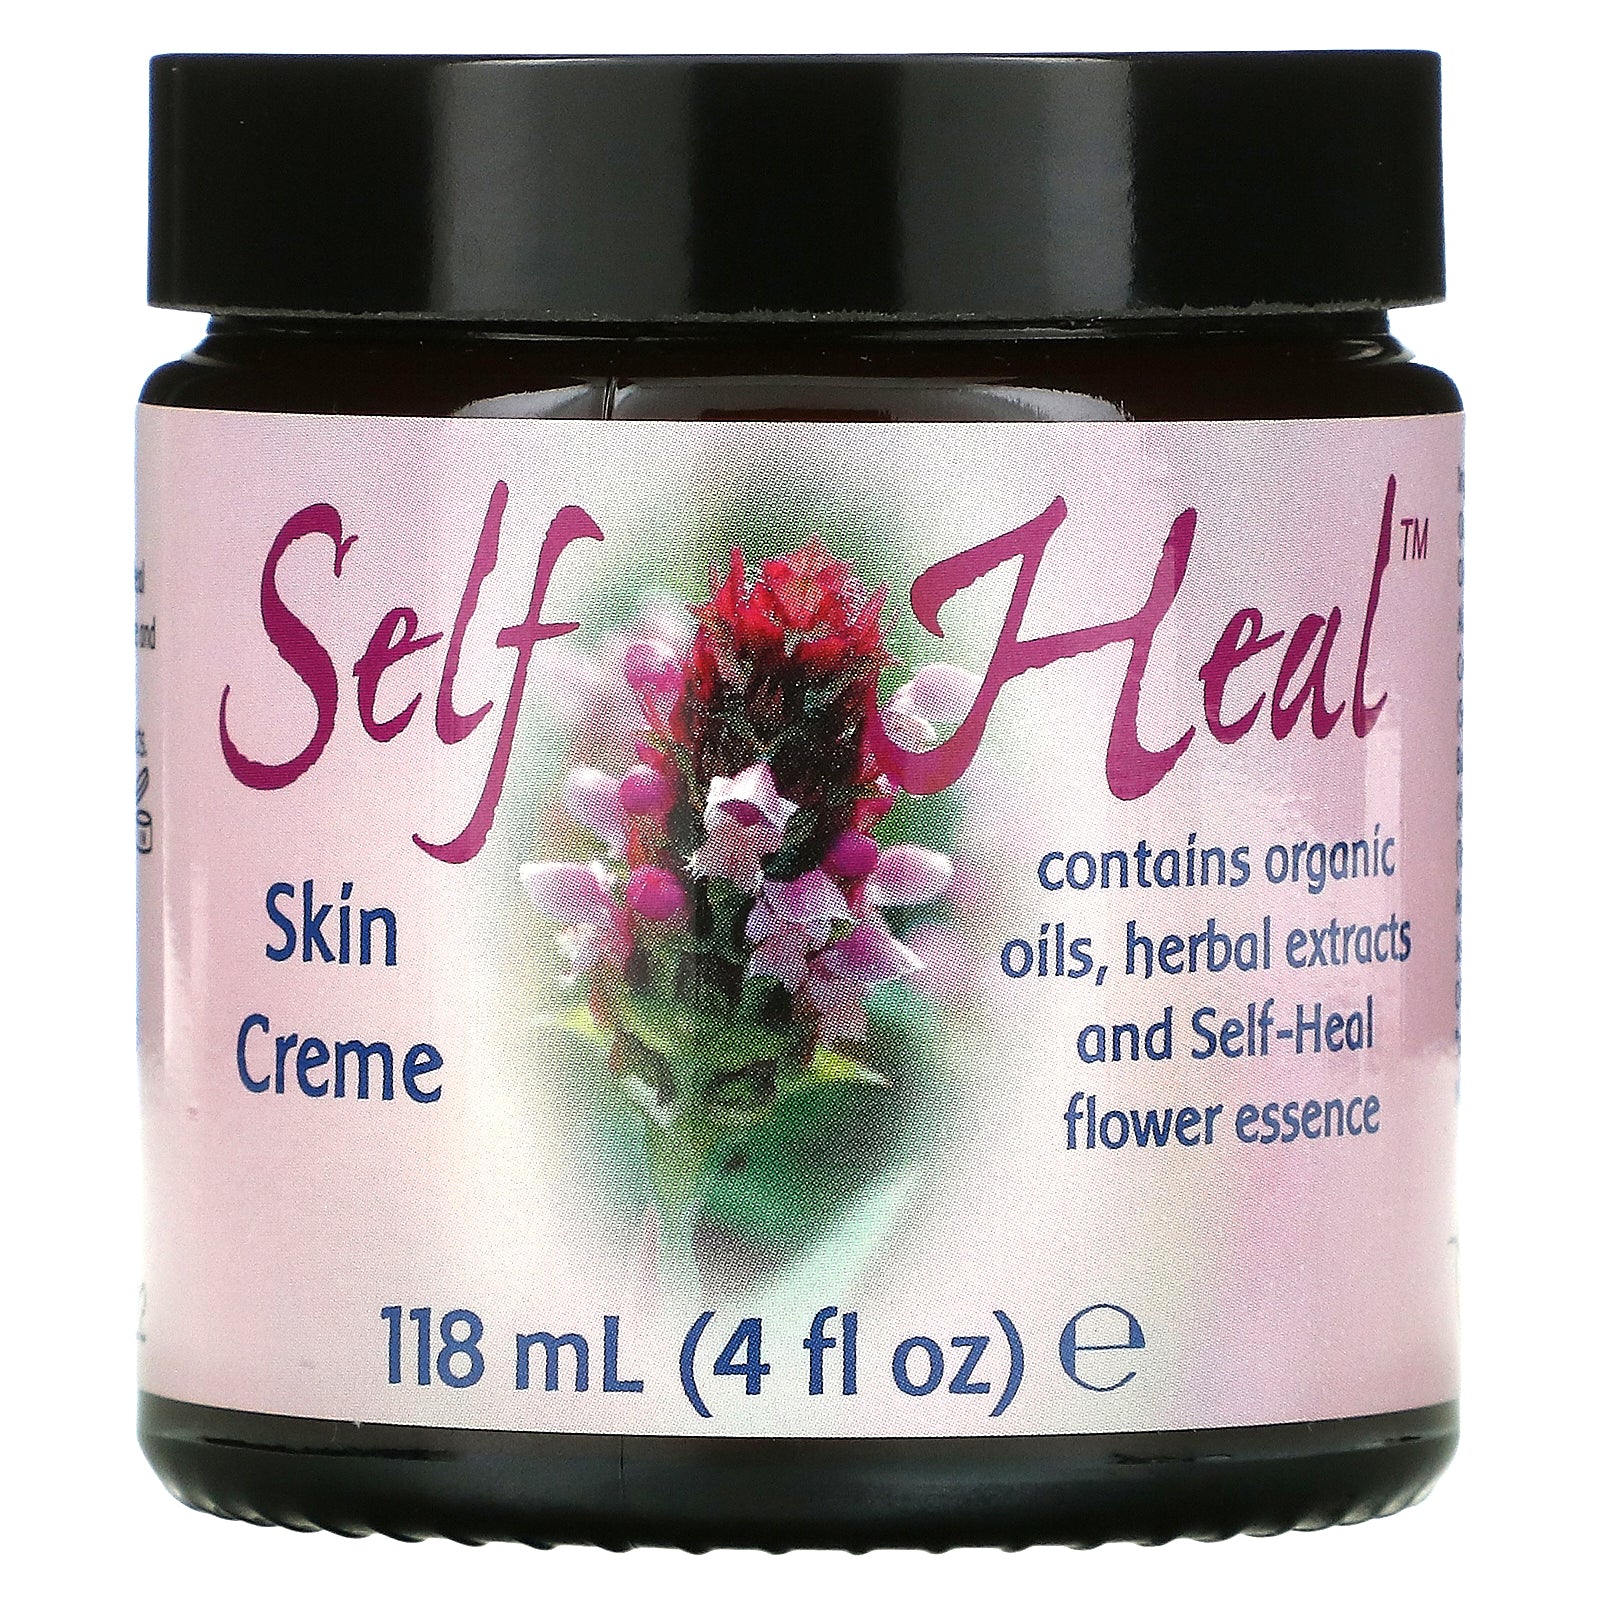 Flower Essence Services, Self Heal Skin Cream